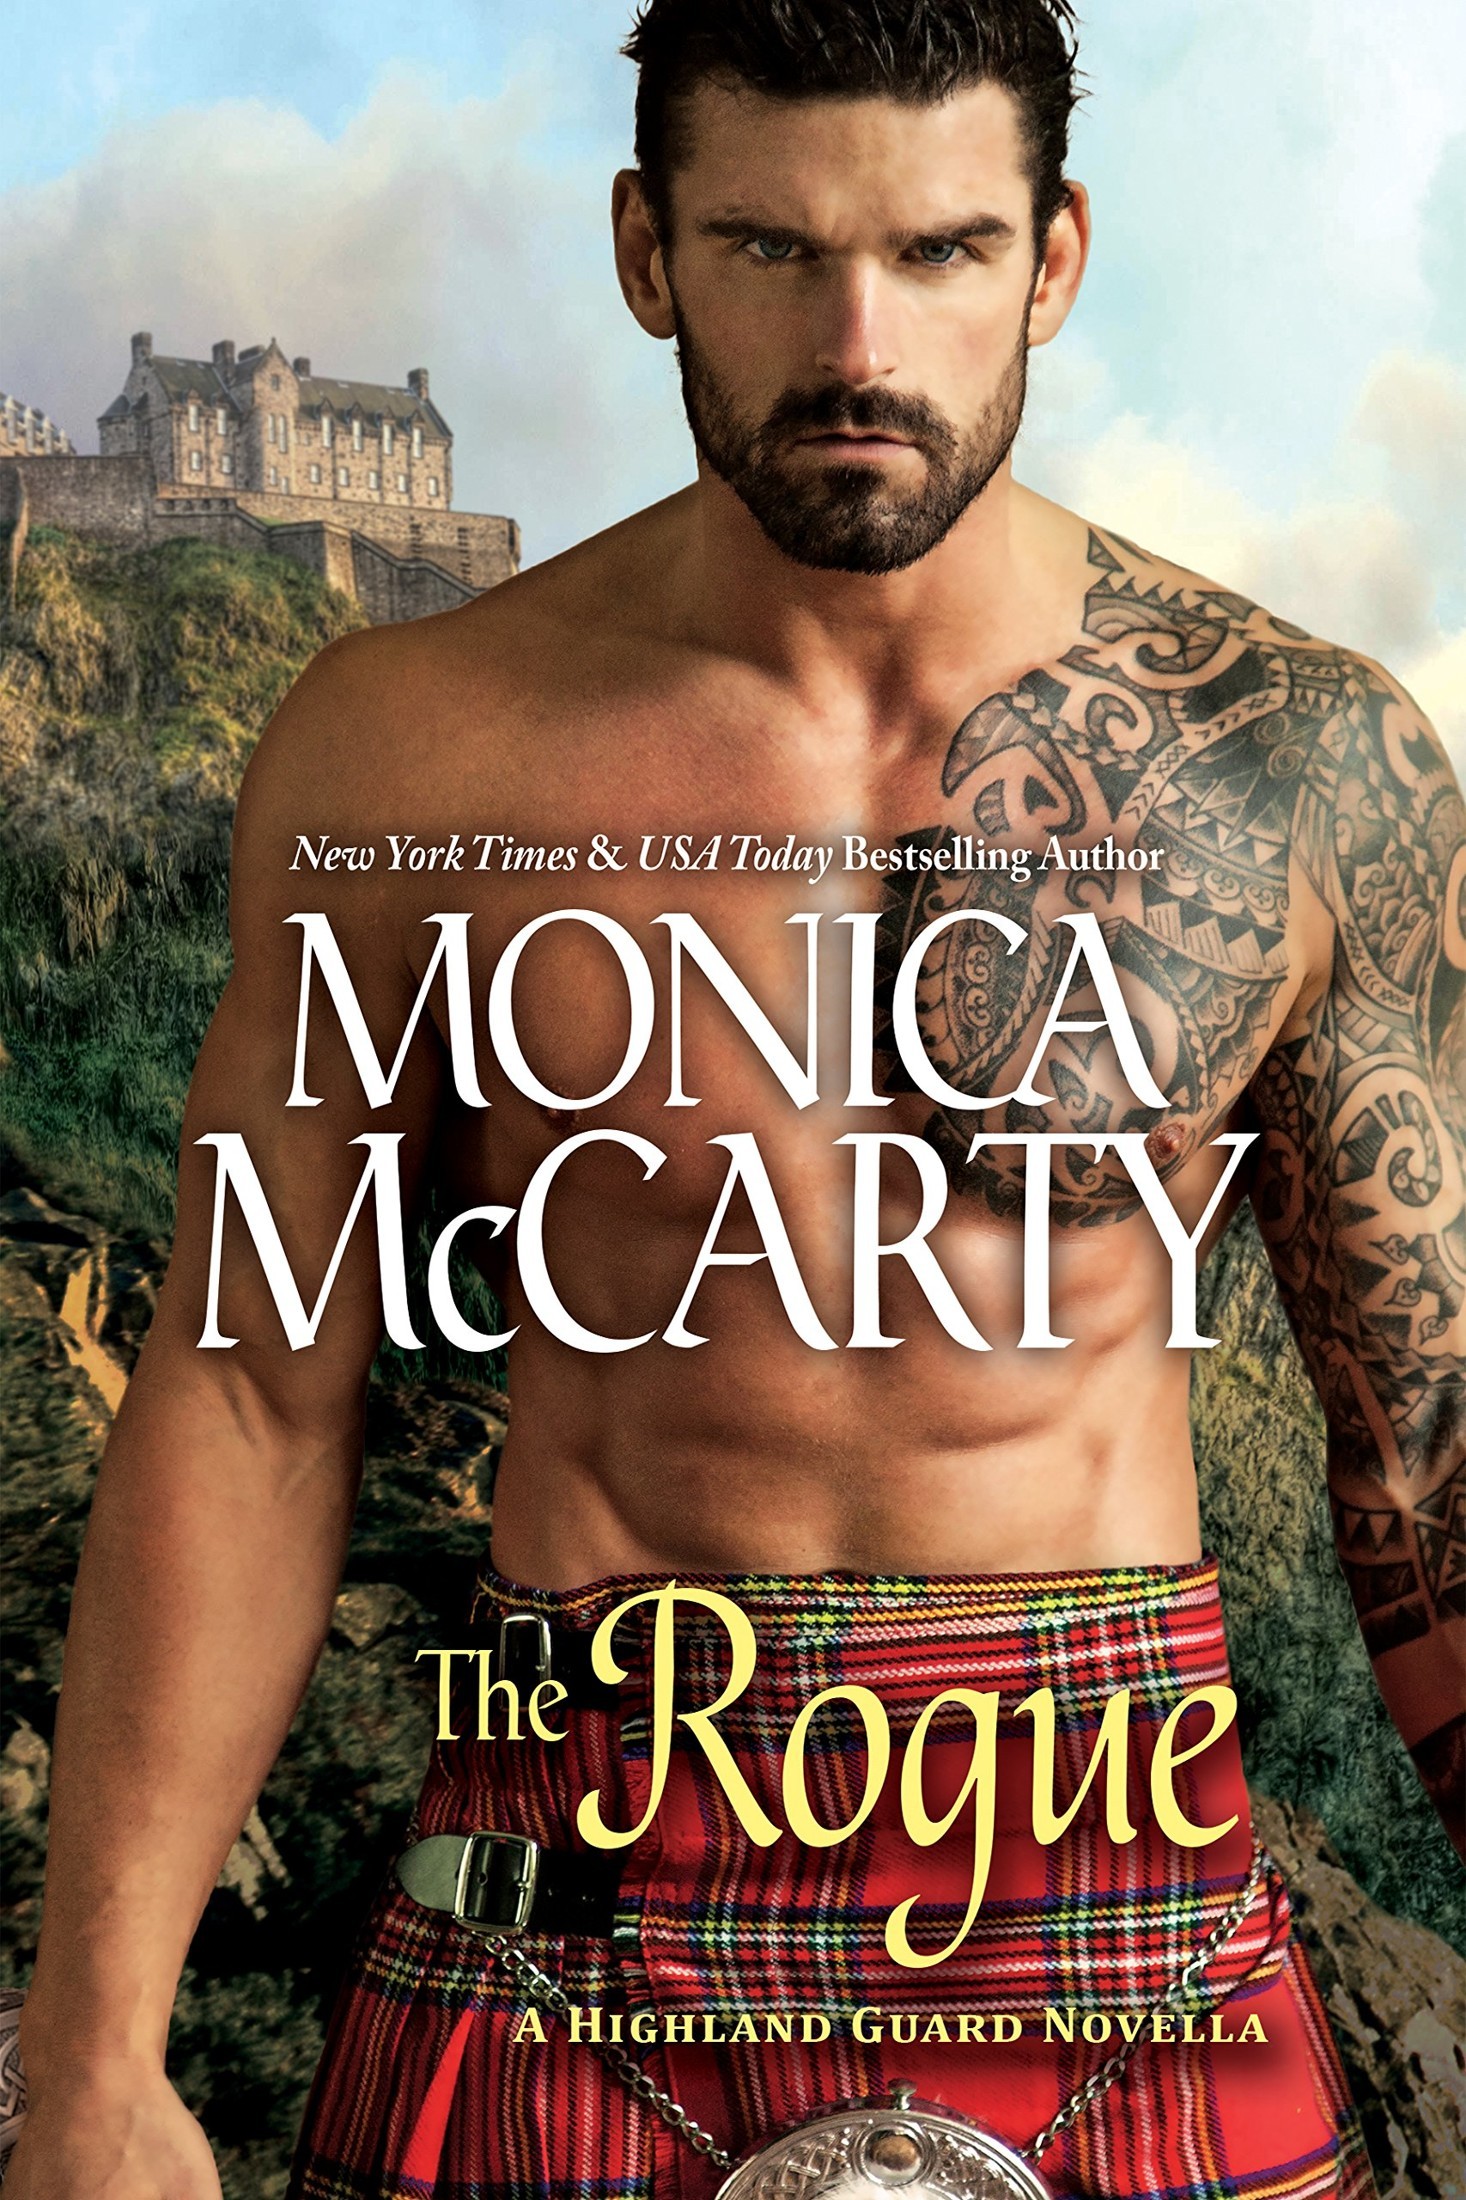 The Rogue: A Highland Guard Novella (The Highland Guard) by Monica McCarty